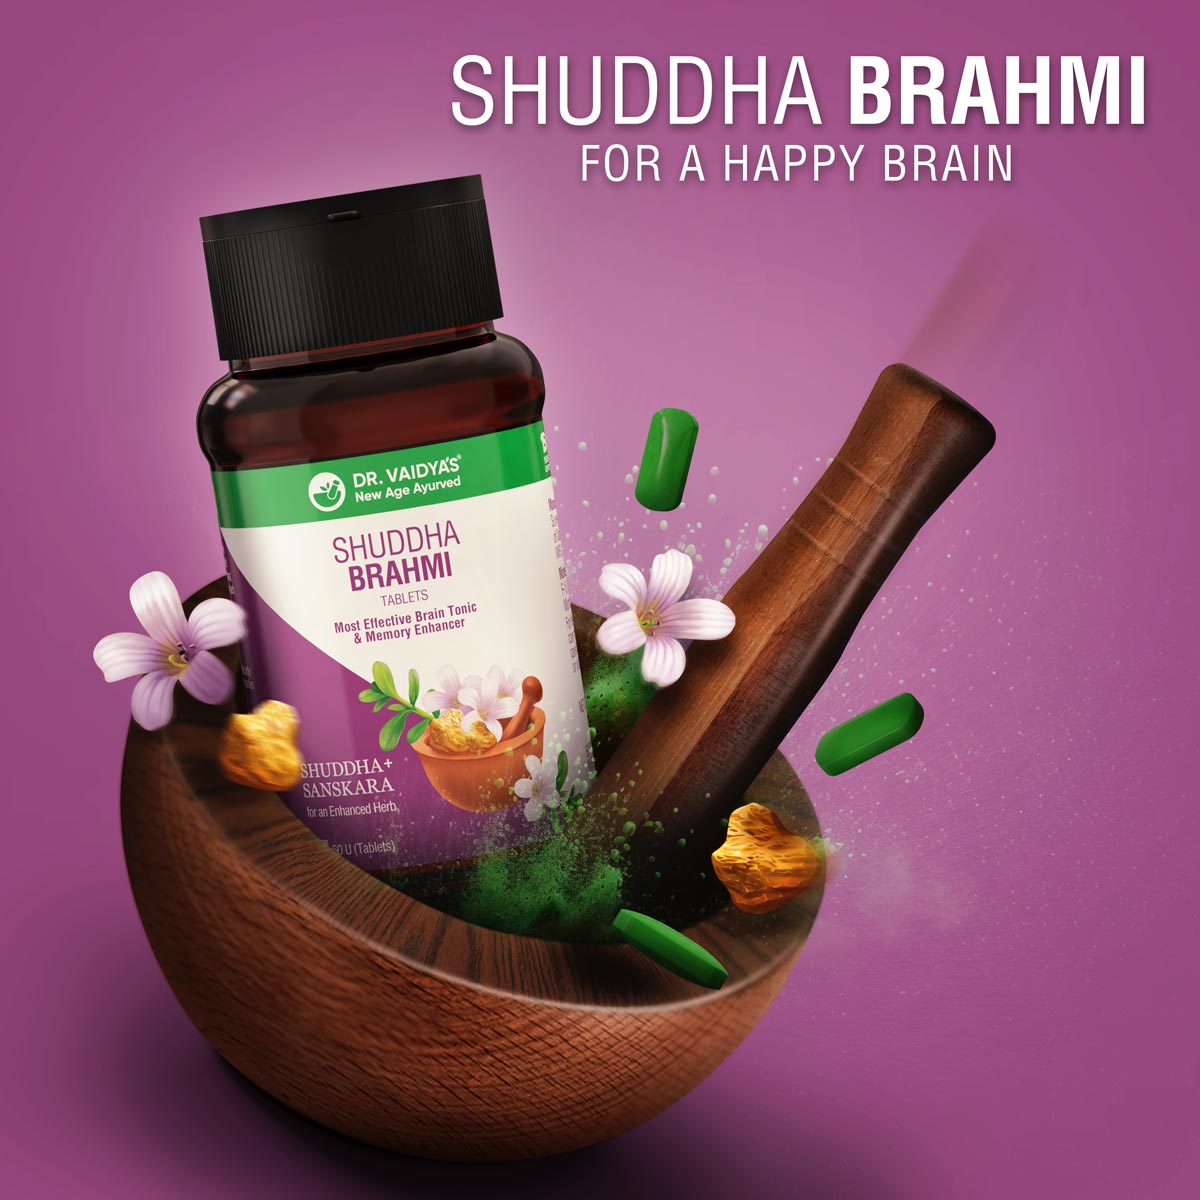 Shuddha Brahmi: Most Effective Brain Tonic & Memory Enhancer